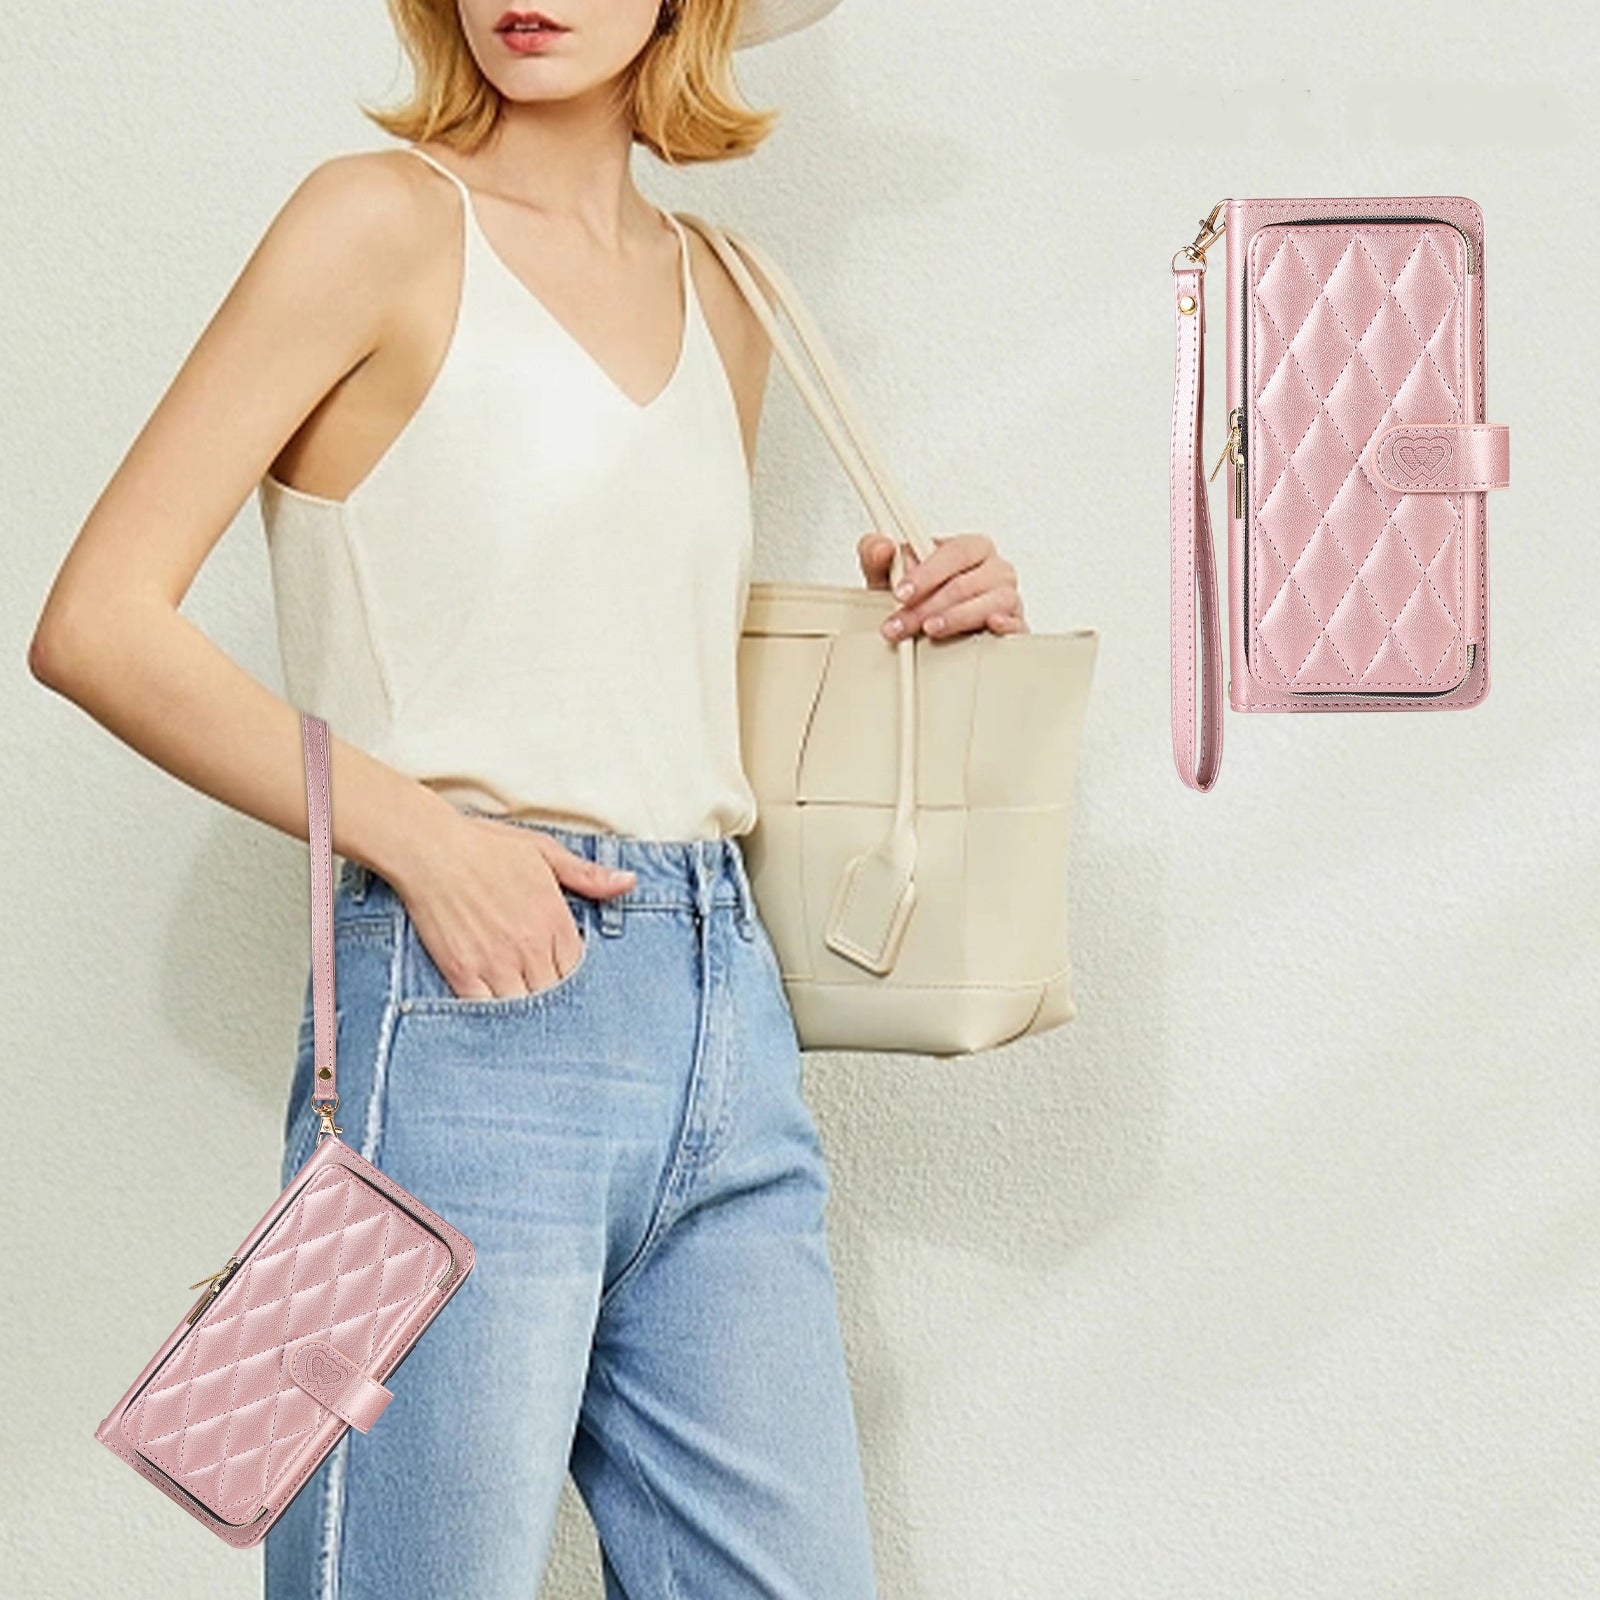 himoda wallet iphone case - pink